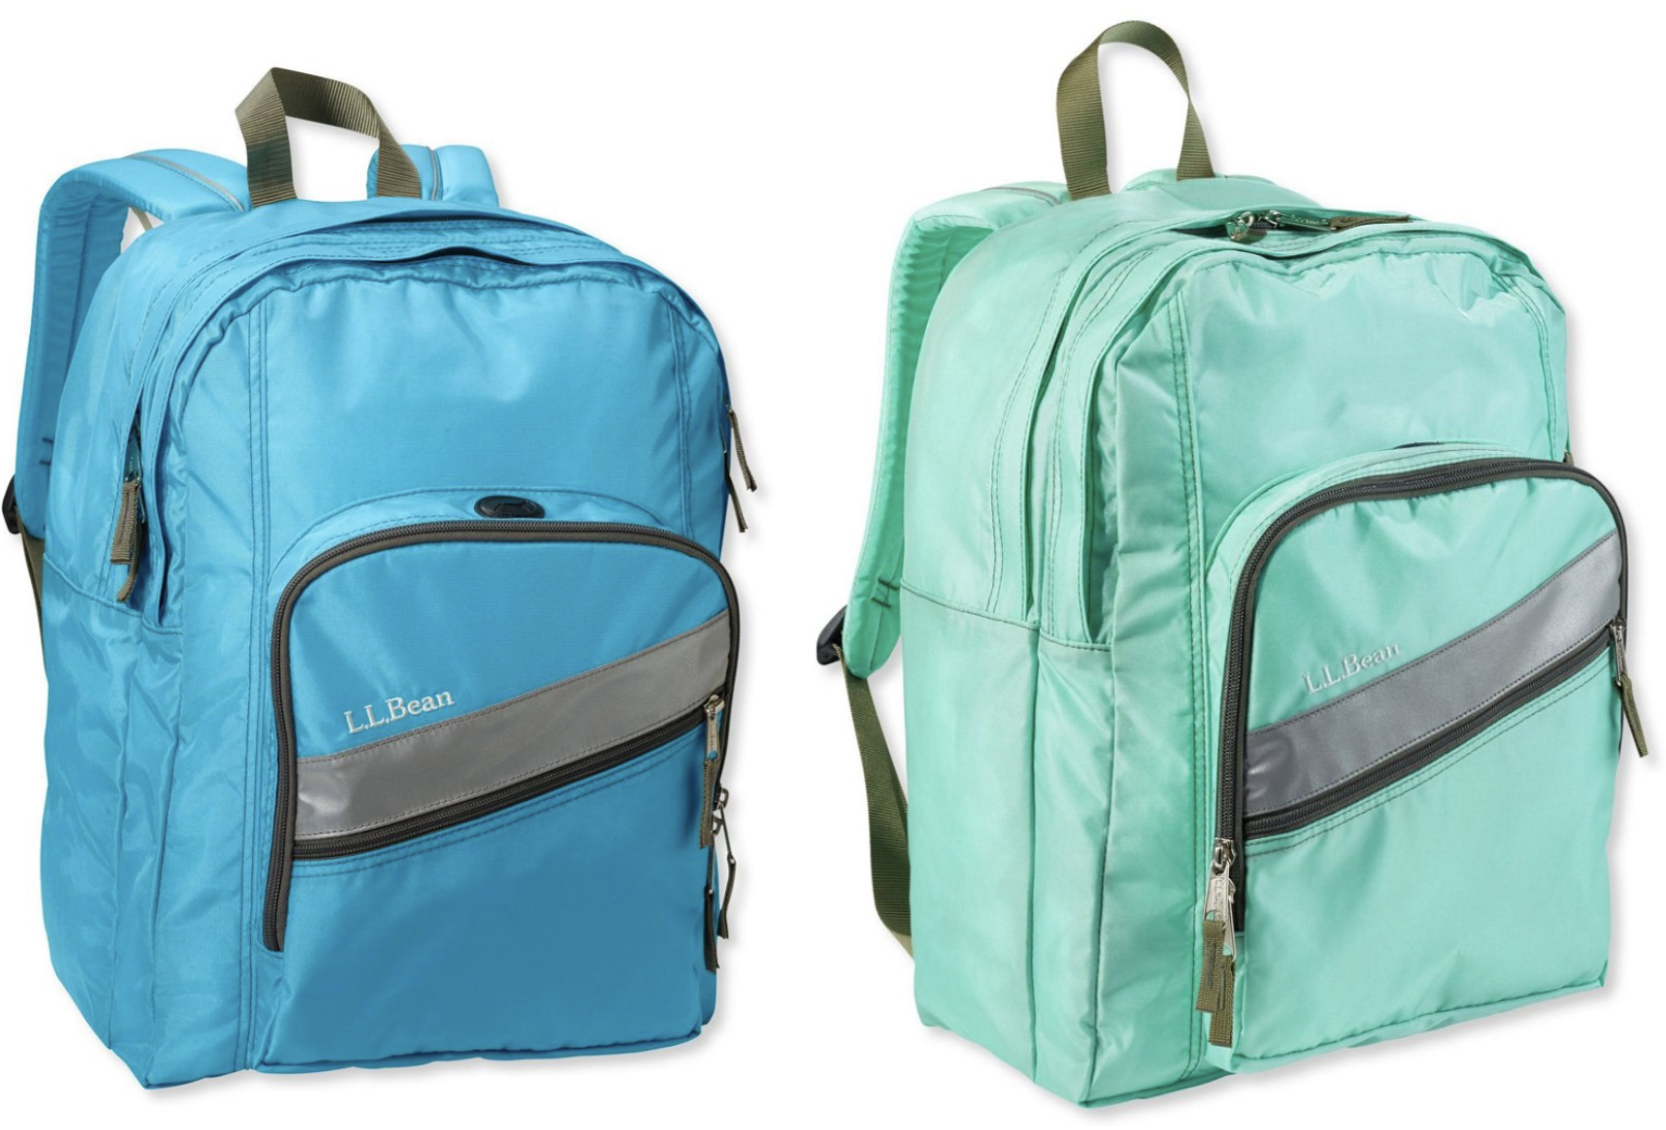 L.L. Bean Backpacks for just $14.99 (Reg. $40)!